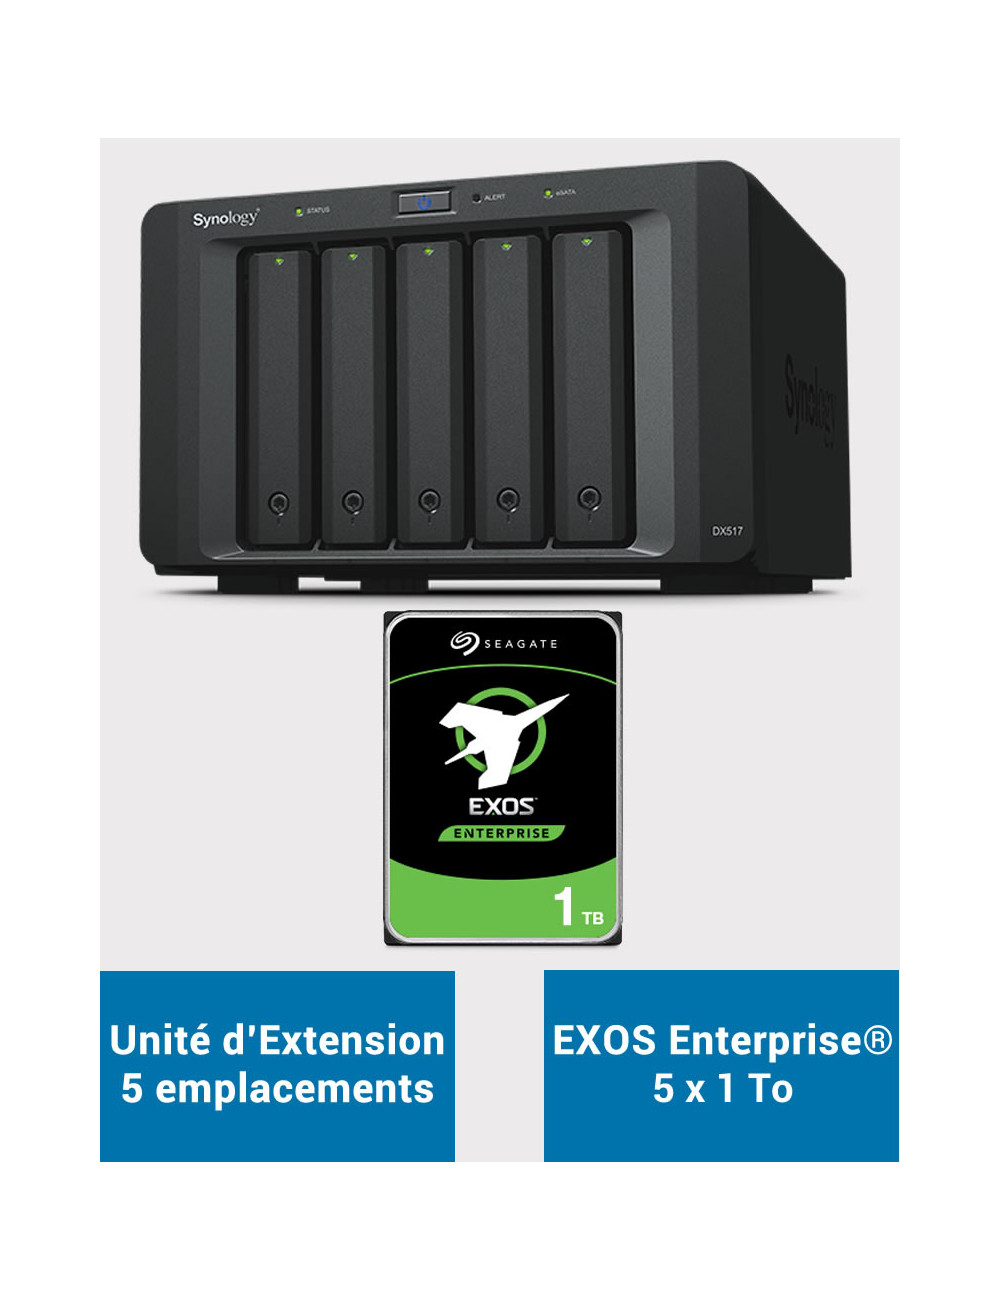 Synology DX517 Unité d'extension EXOS Enterprise 5To (5x1To)